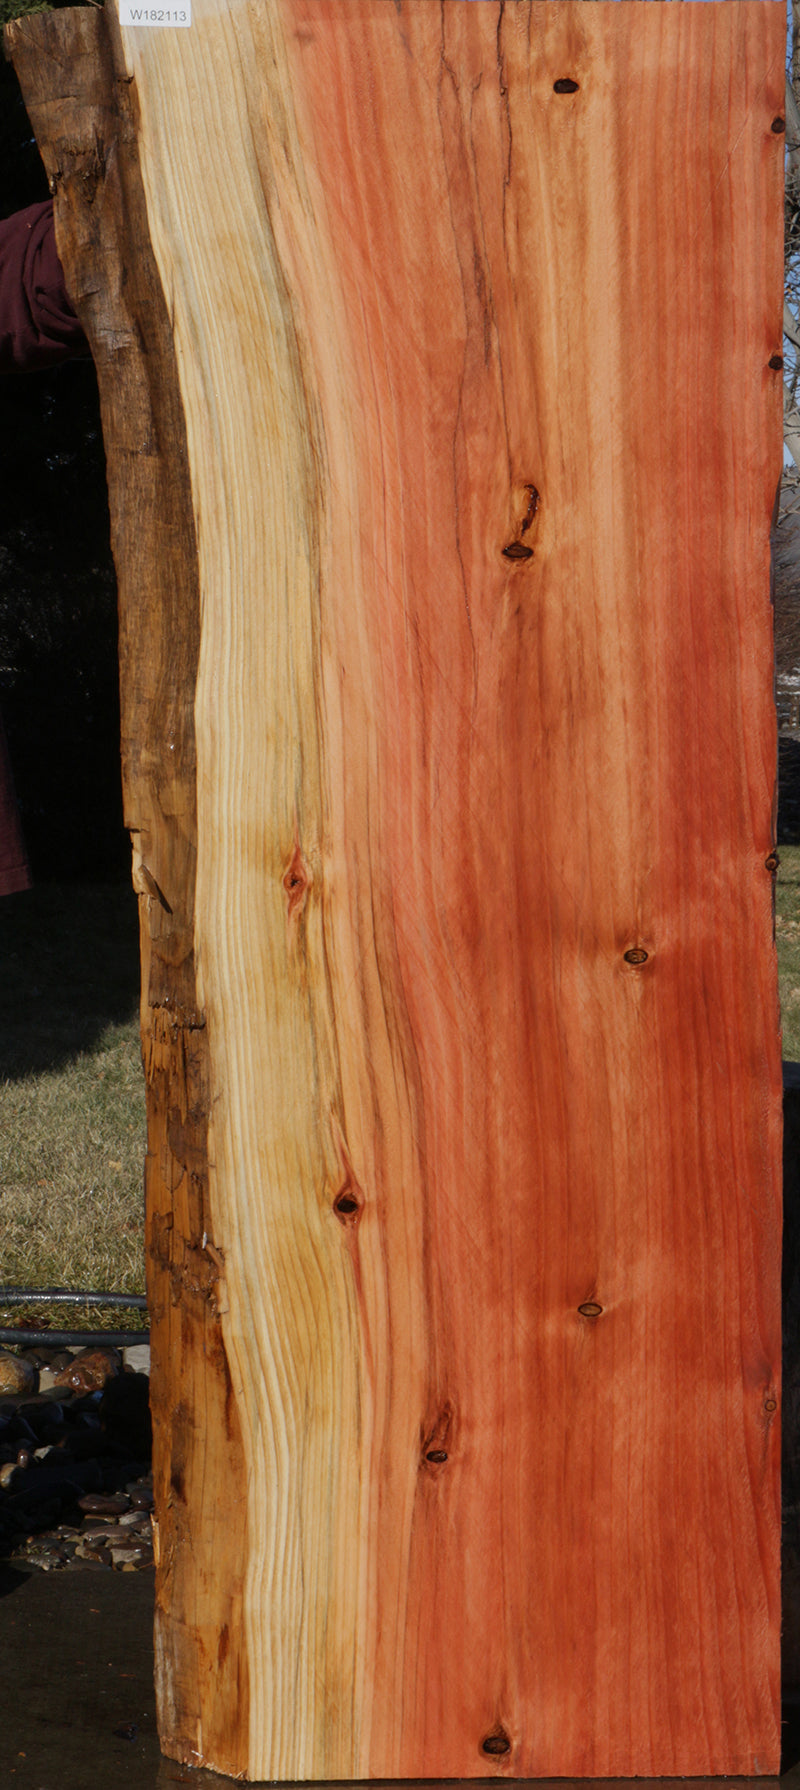 Rustic Wood Slices Poplar Wood Slabs